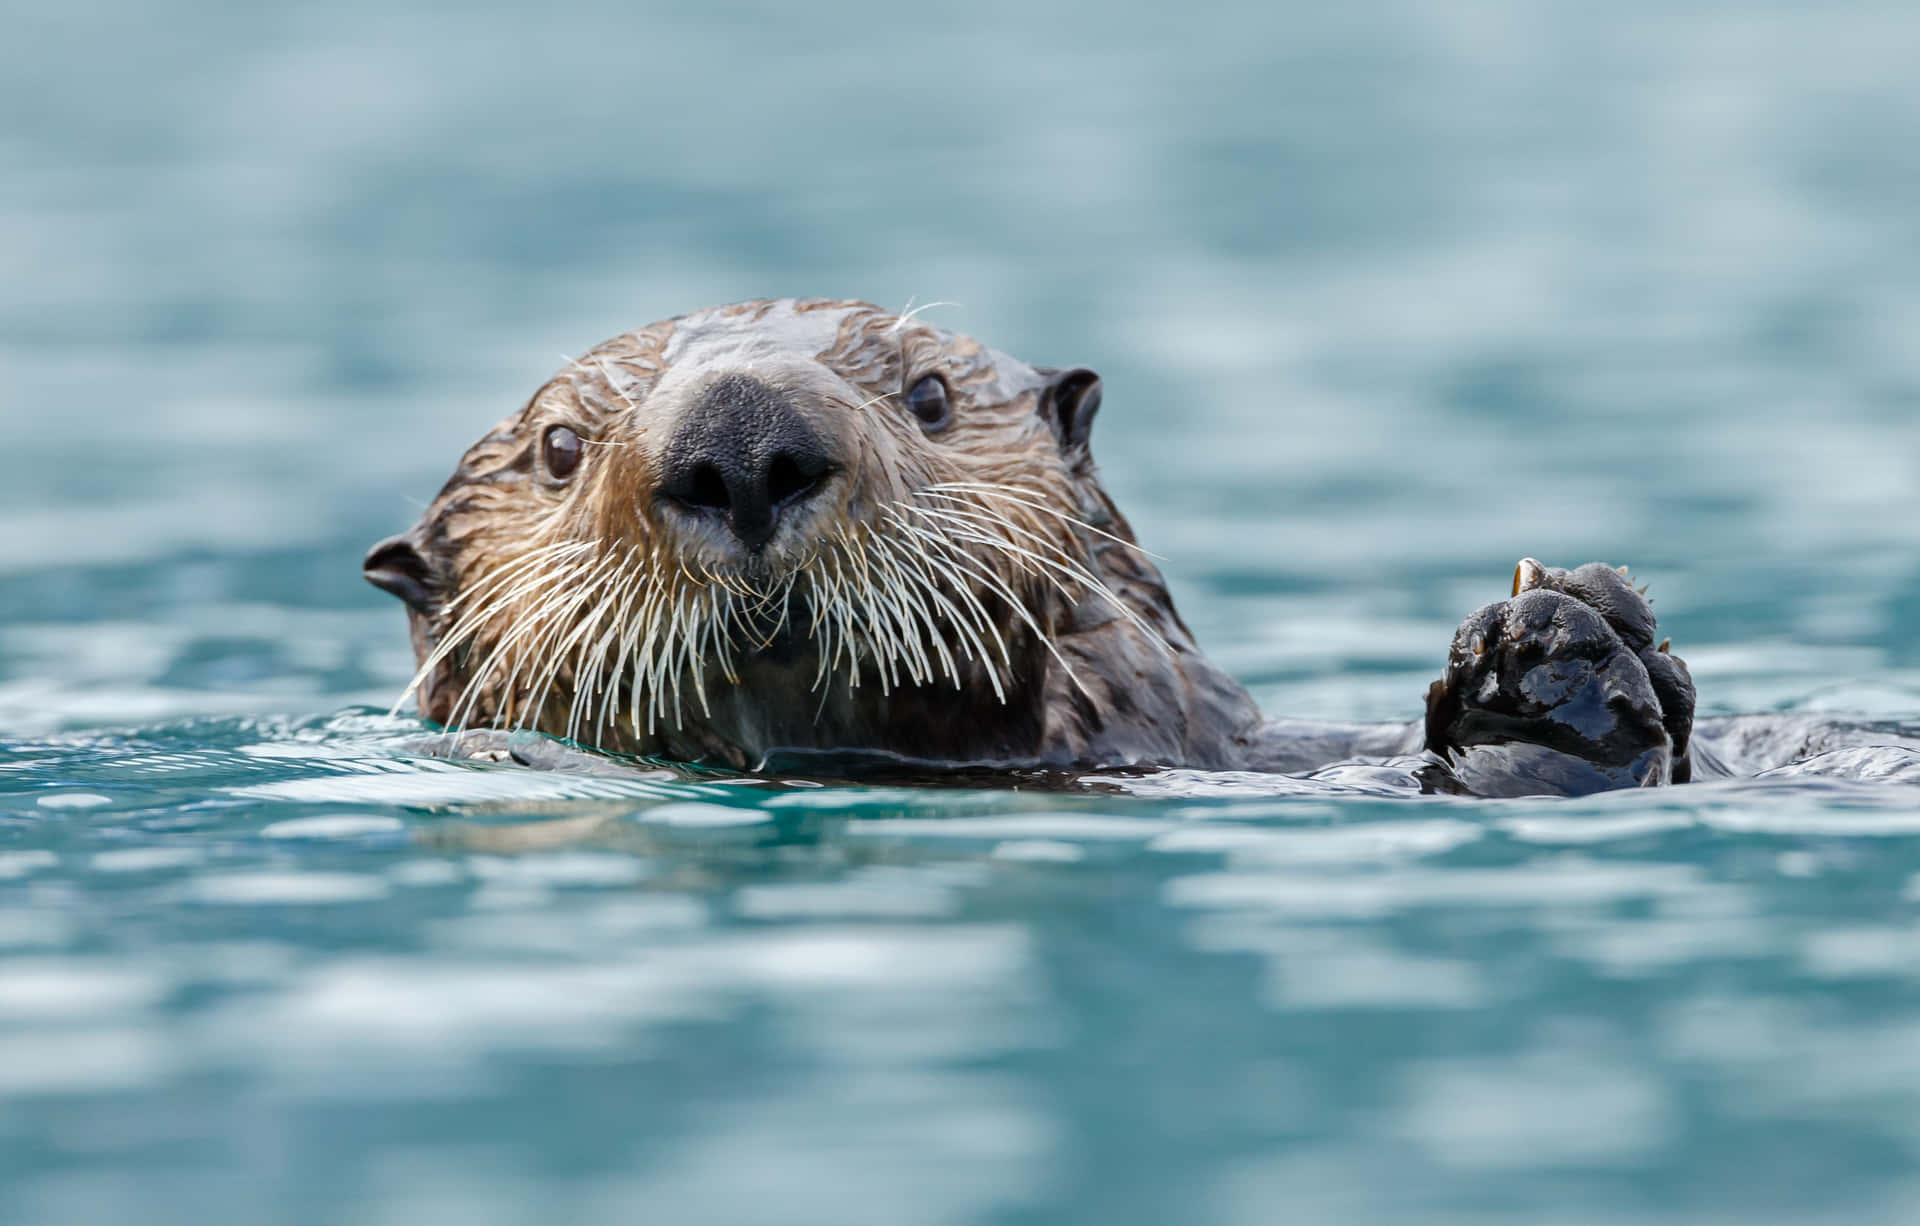 Sea Otter Floatingin Water.jpg